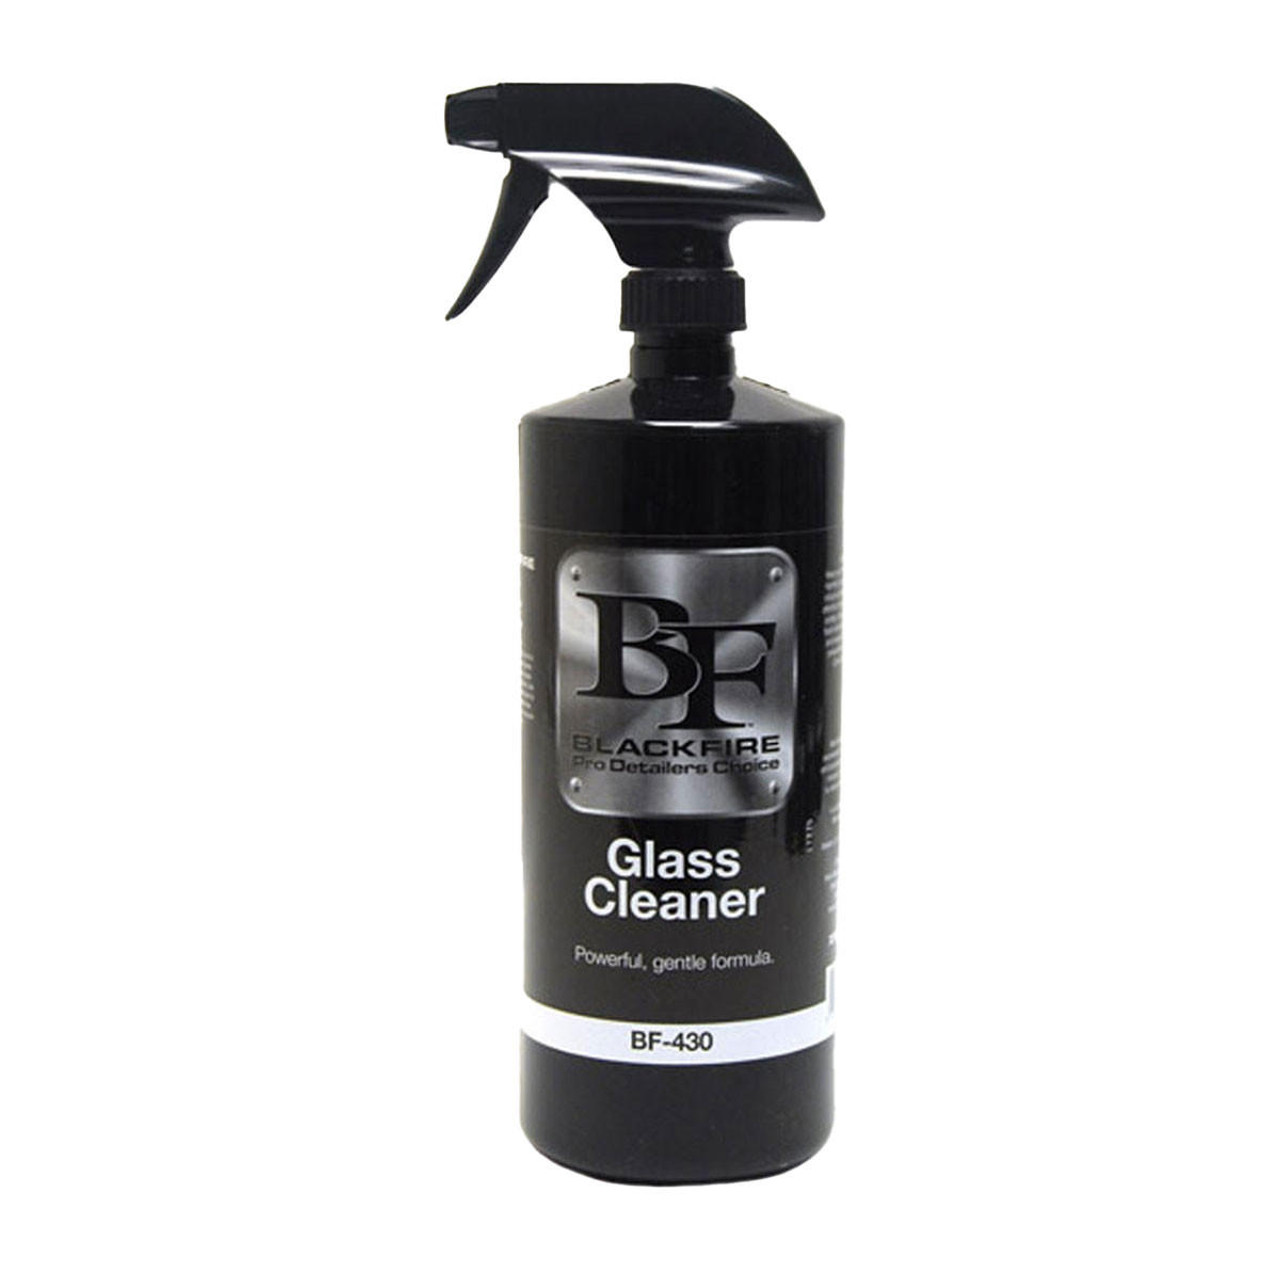 BLACKFIRE Glass Cleaner